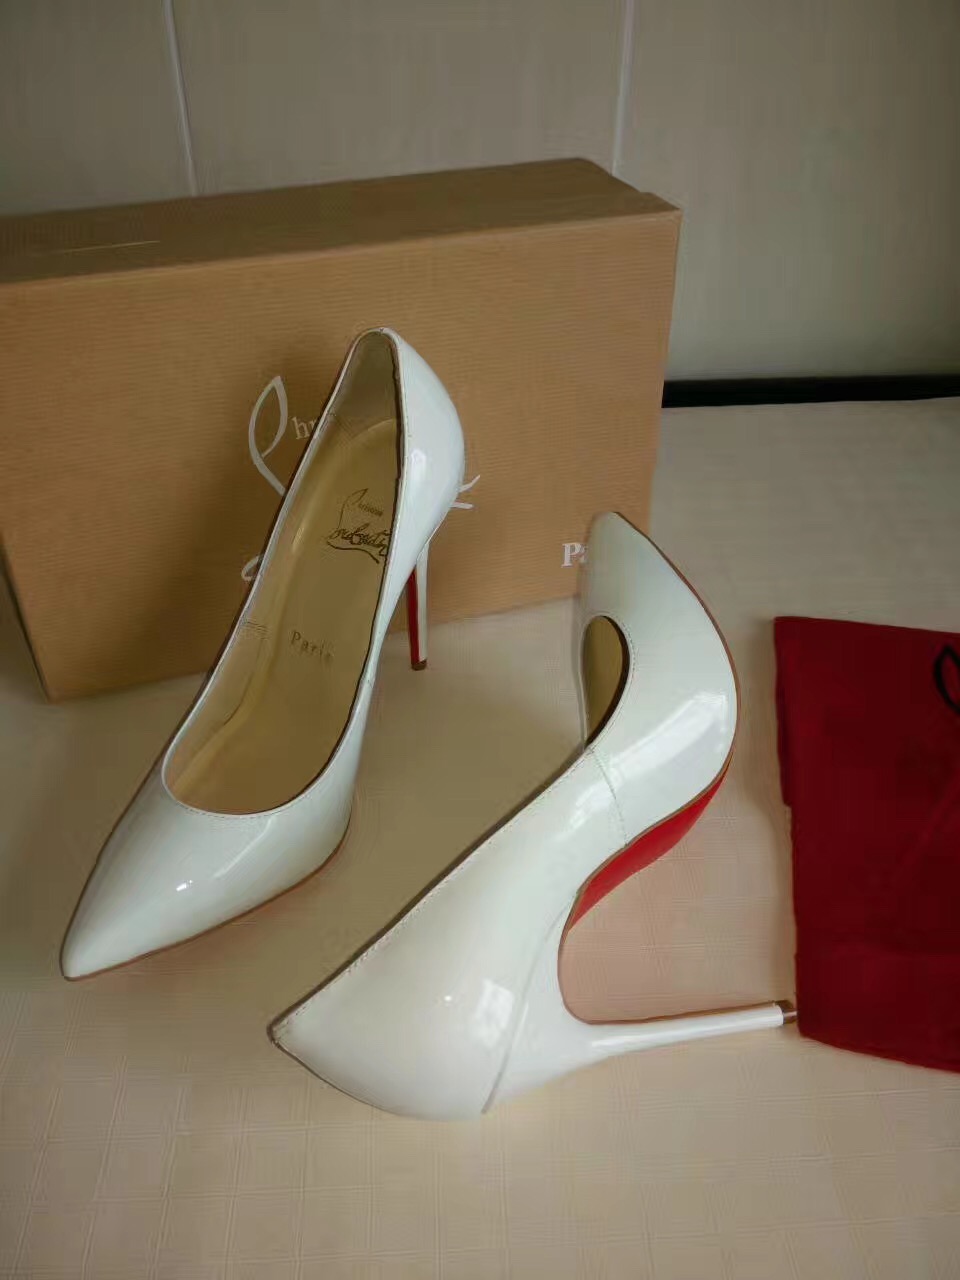 Christian Louboutin CL sandals 11cm heels white shoes